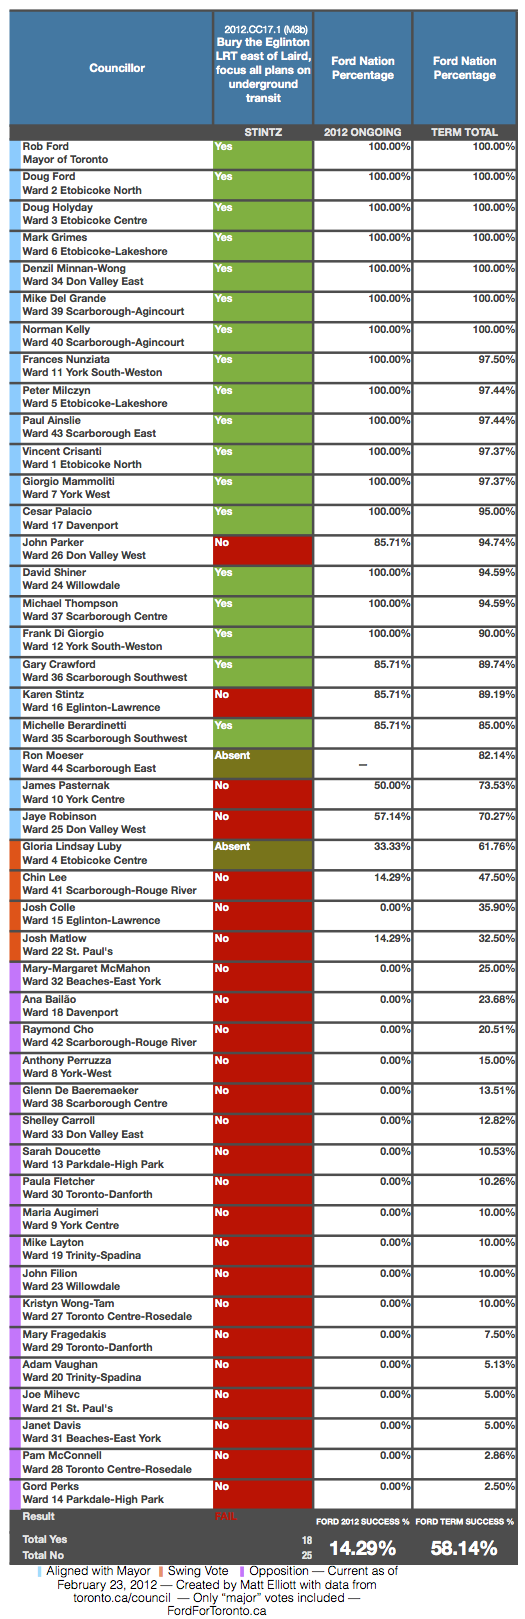 Council Scorecard: February 23, 2012 (New Votes)